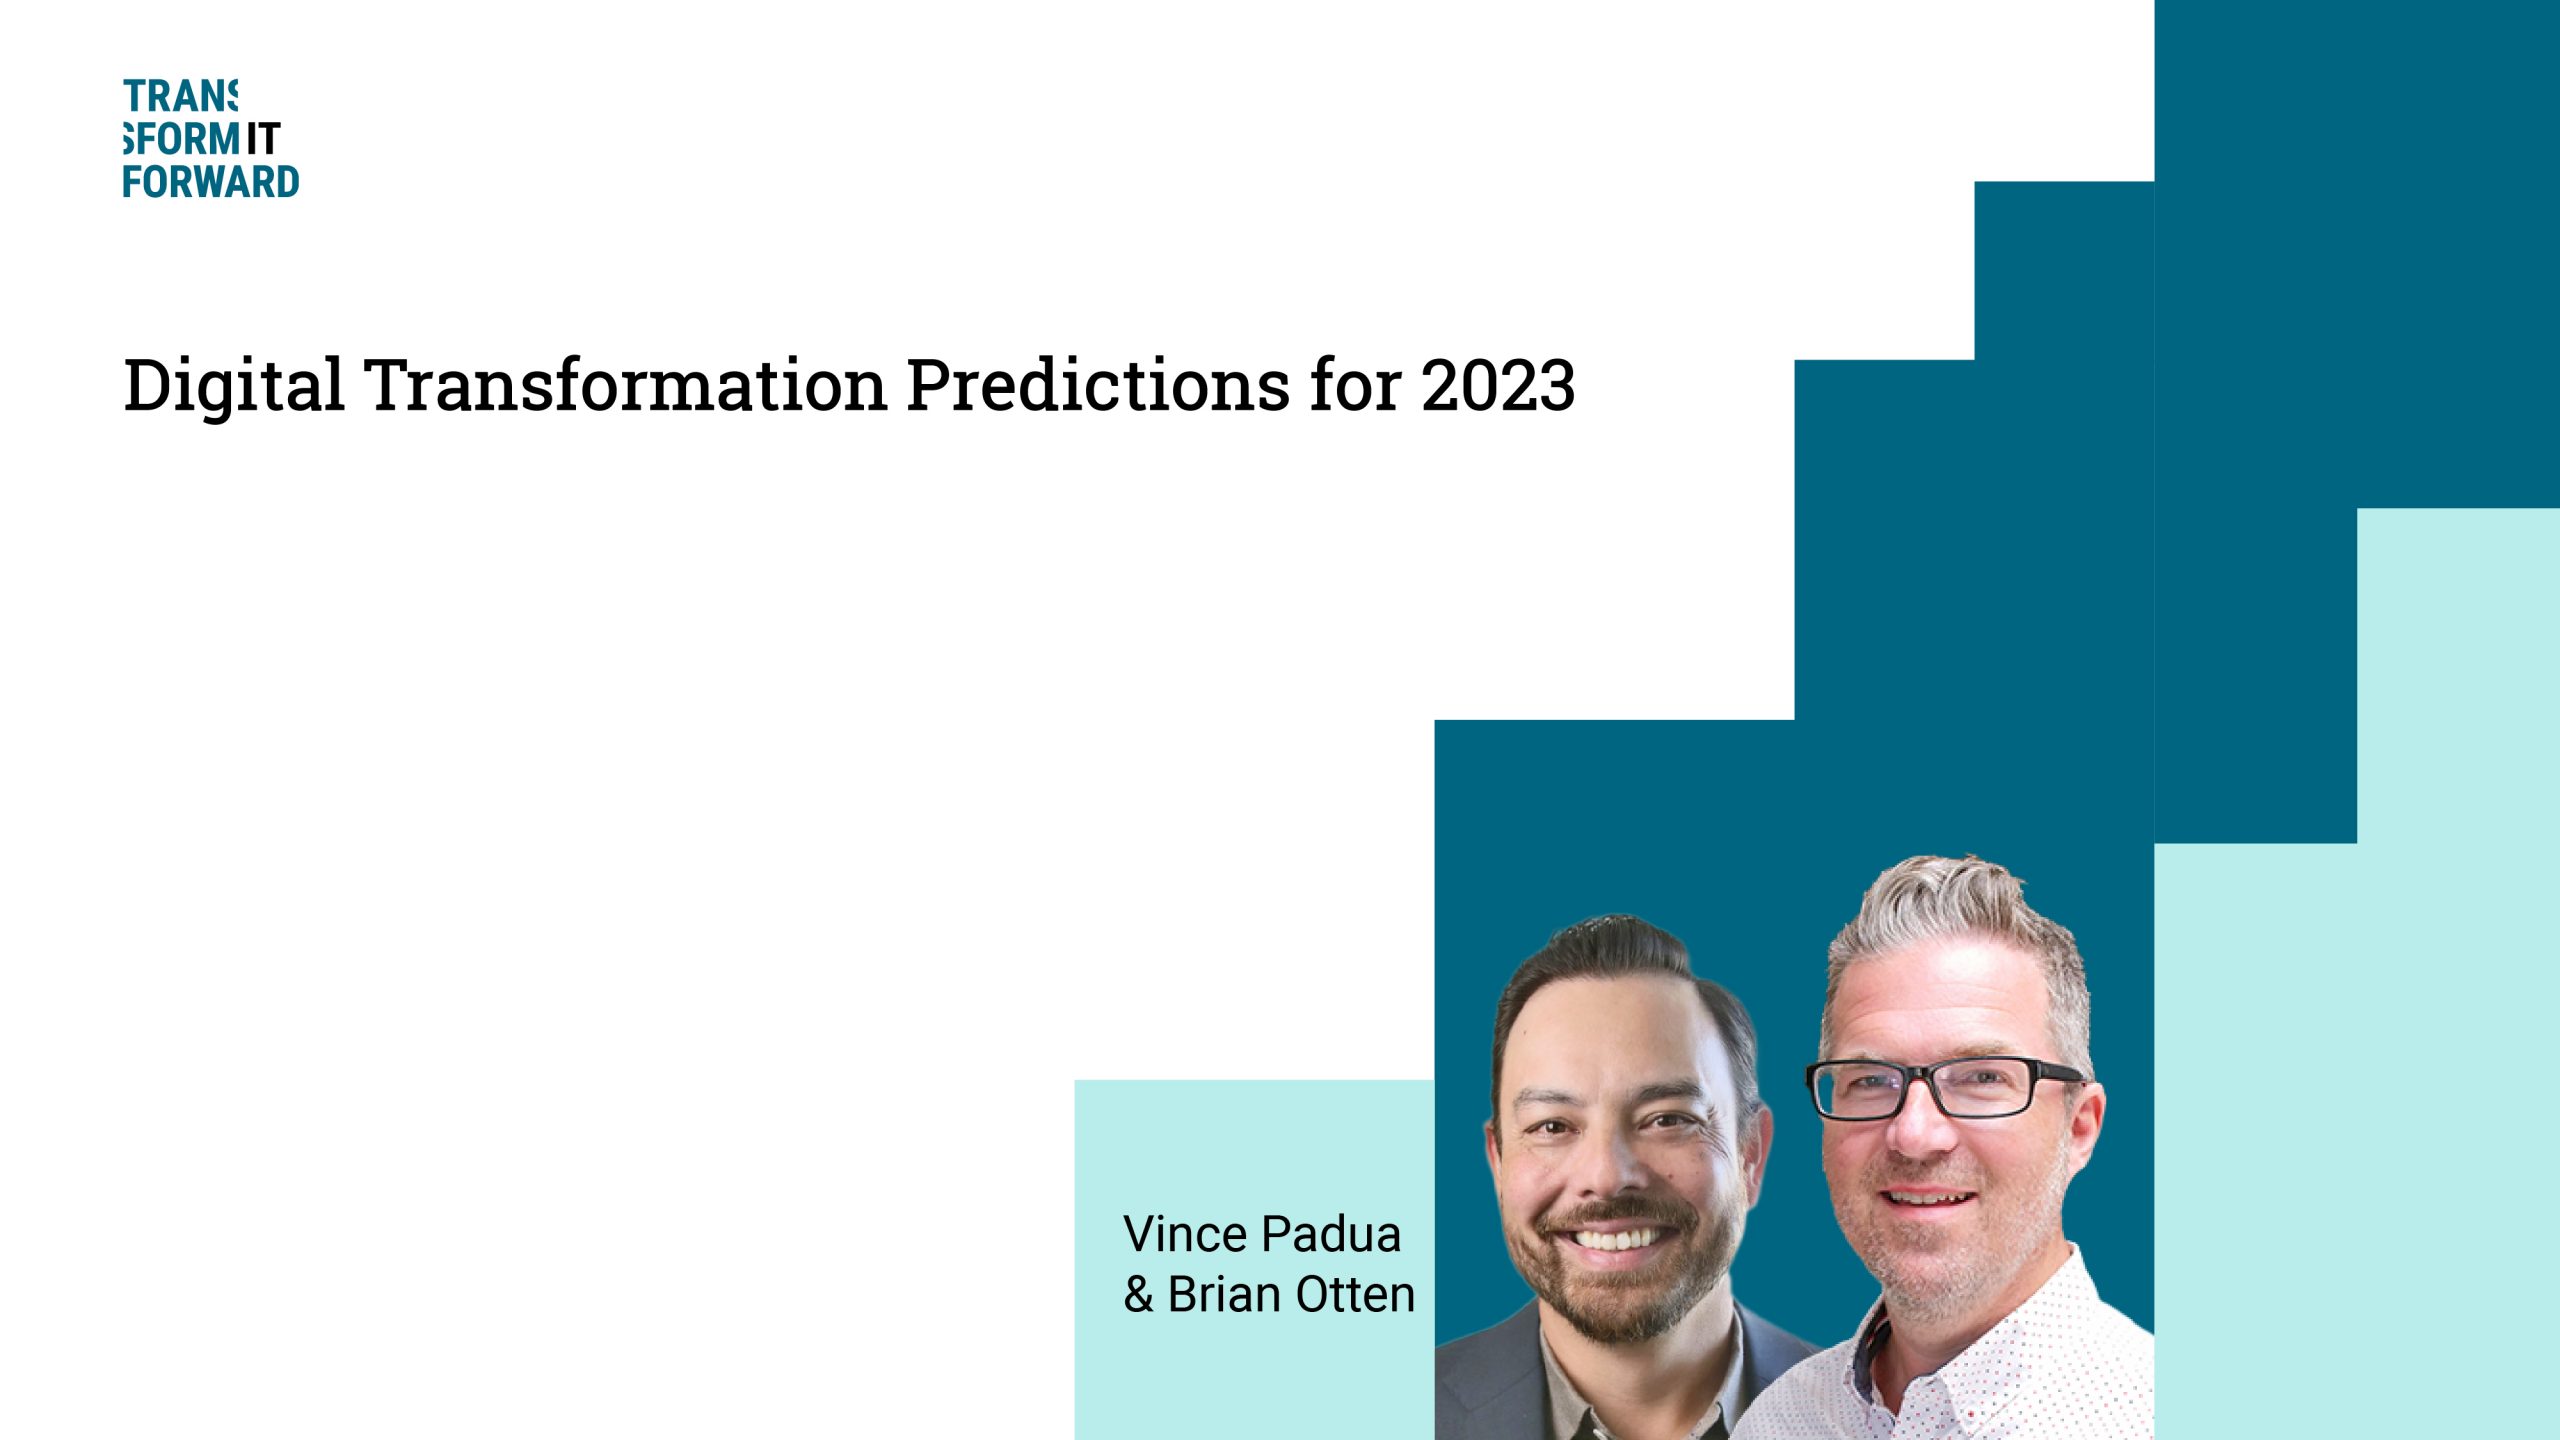 Digital transformation predictions for 2023